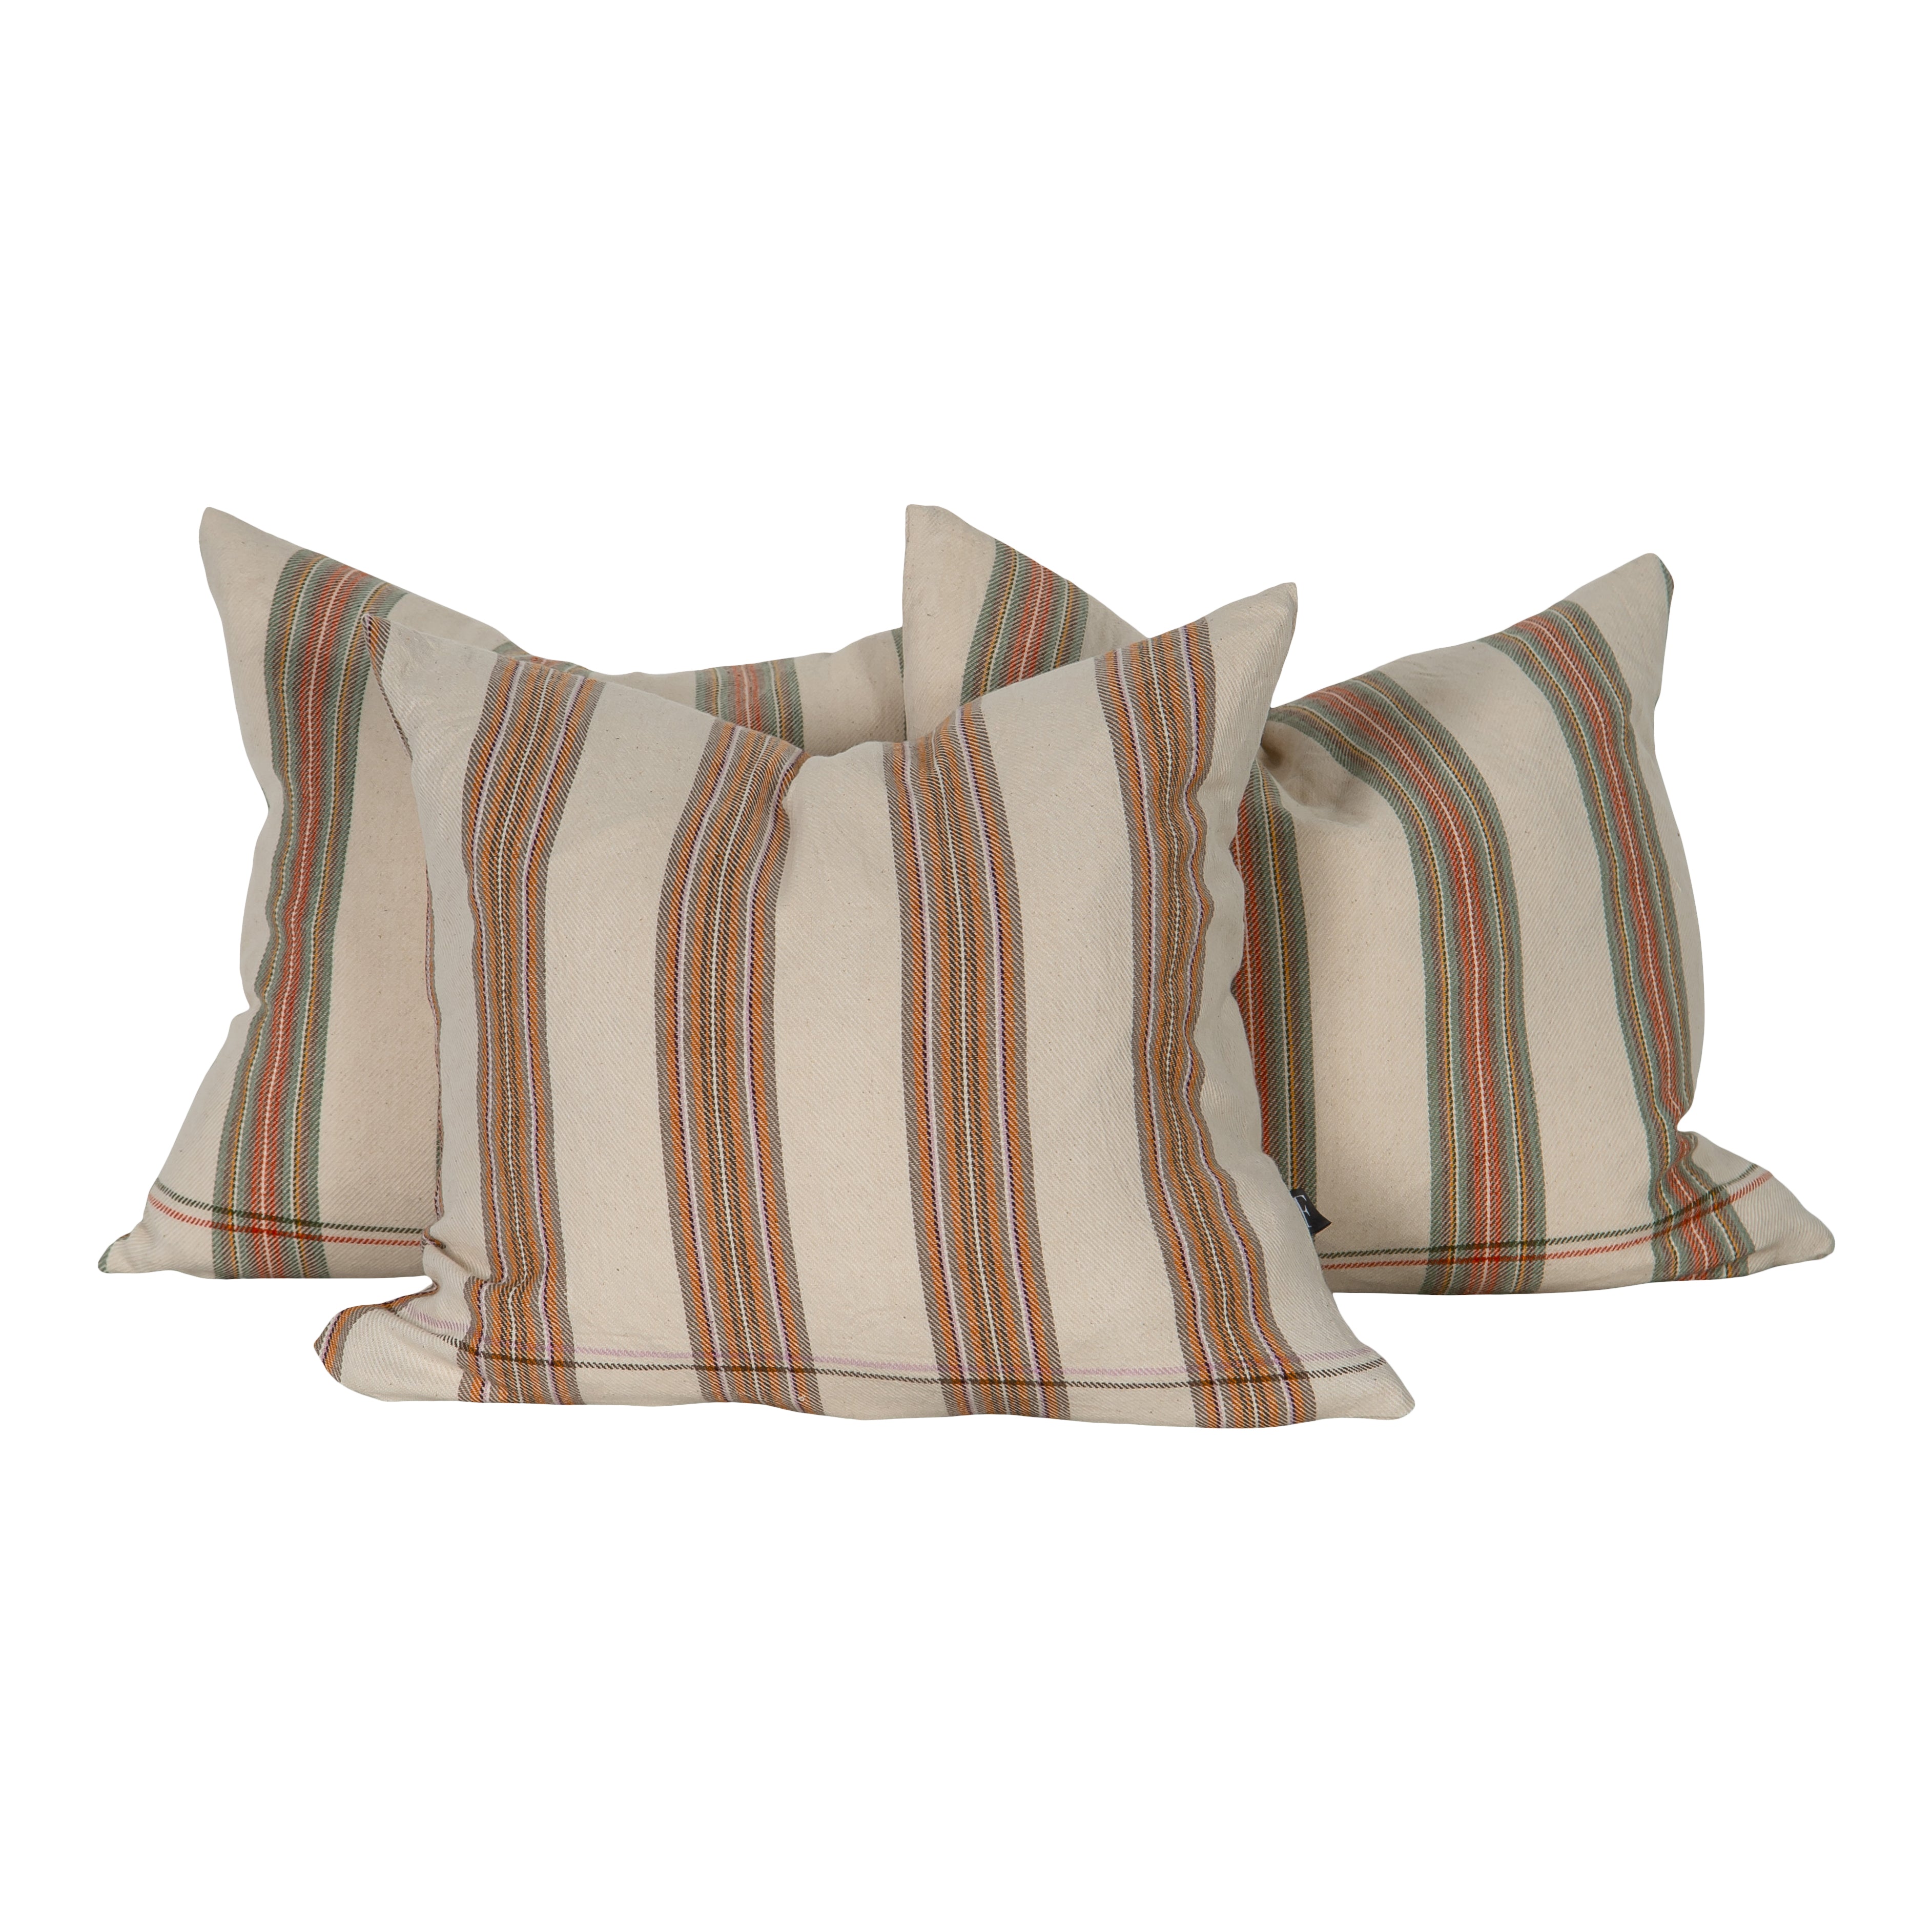 Olida Pillows (Set of 3)